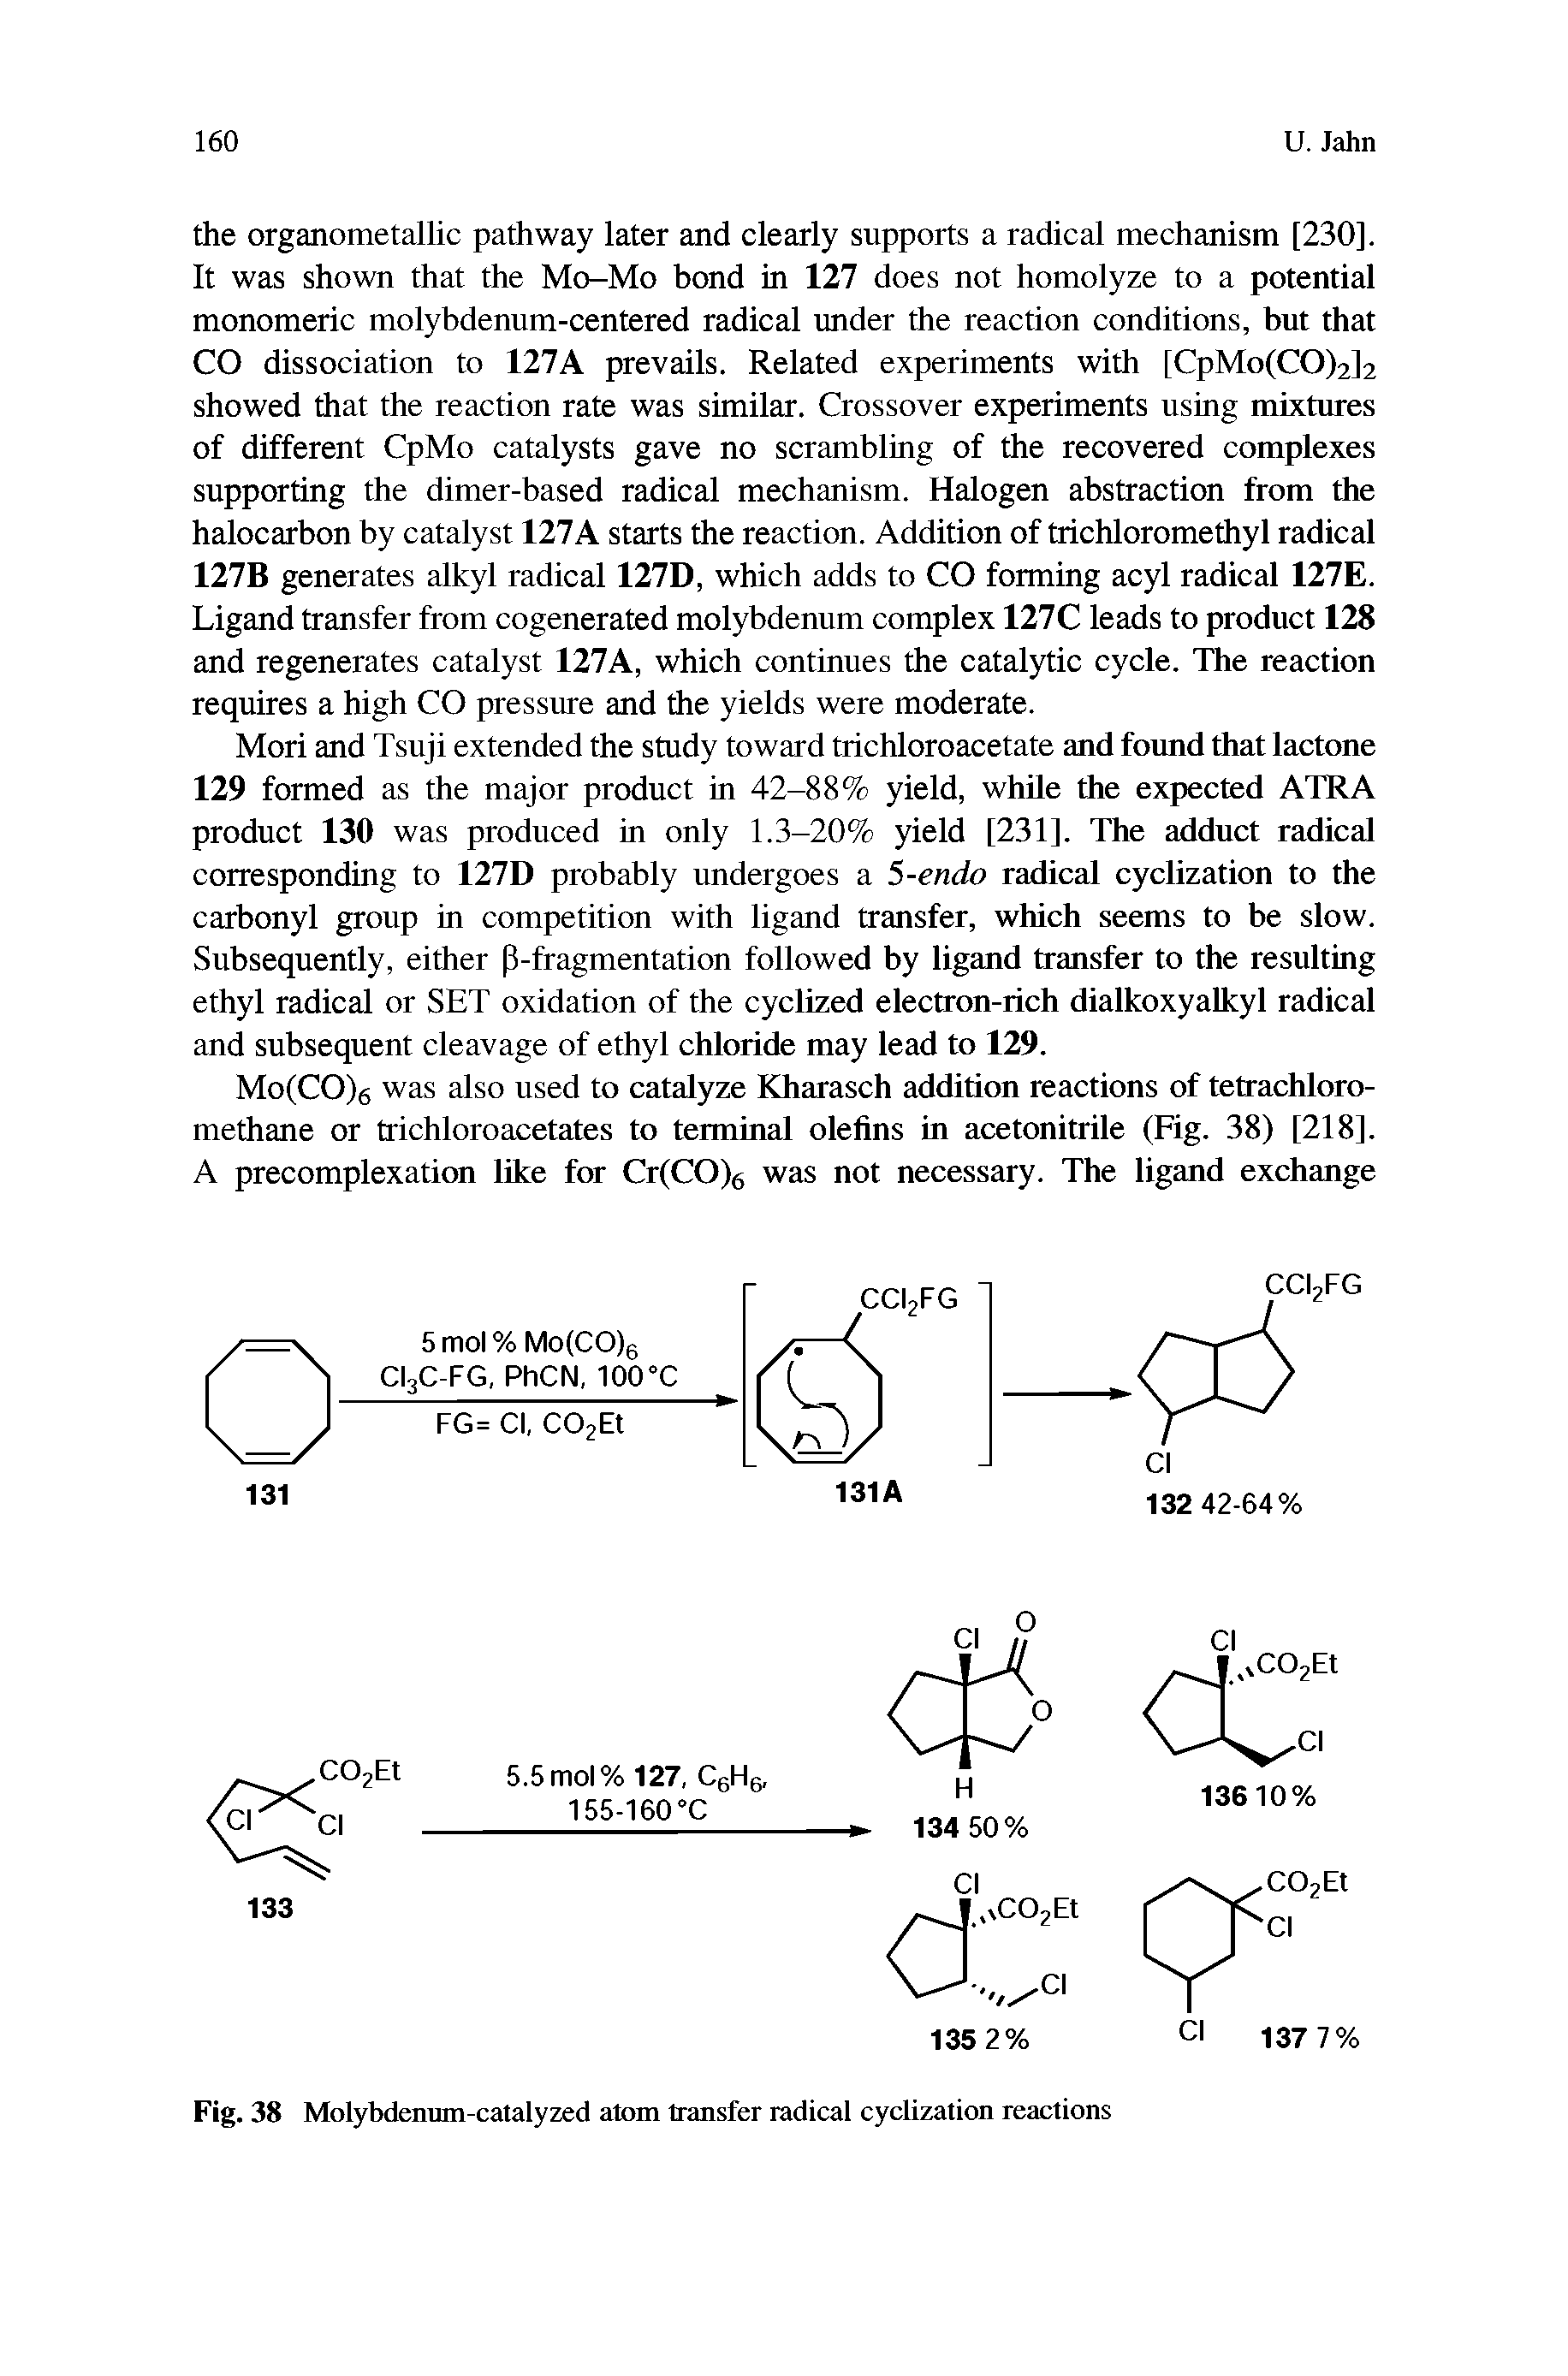 Fig. 38 Molybdenum-catalyzed atom transfer radical cyclization reactions...